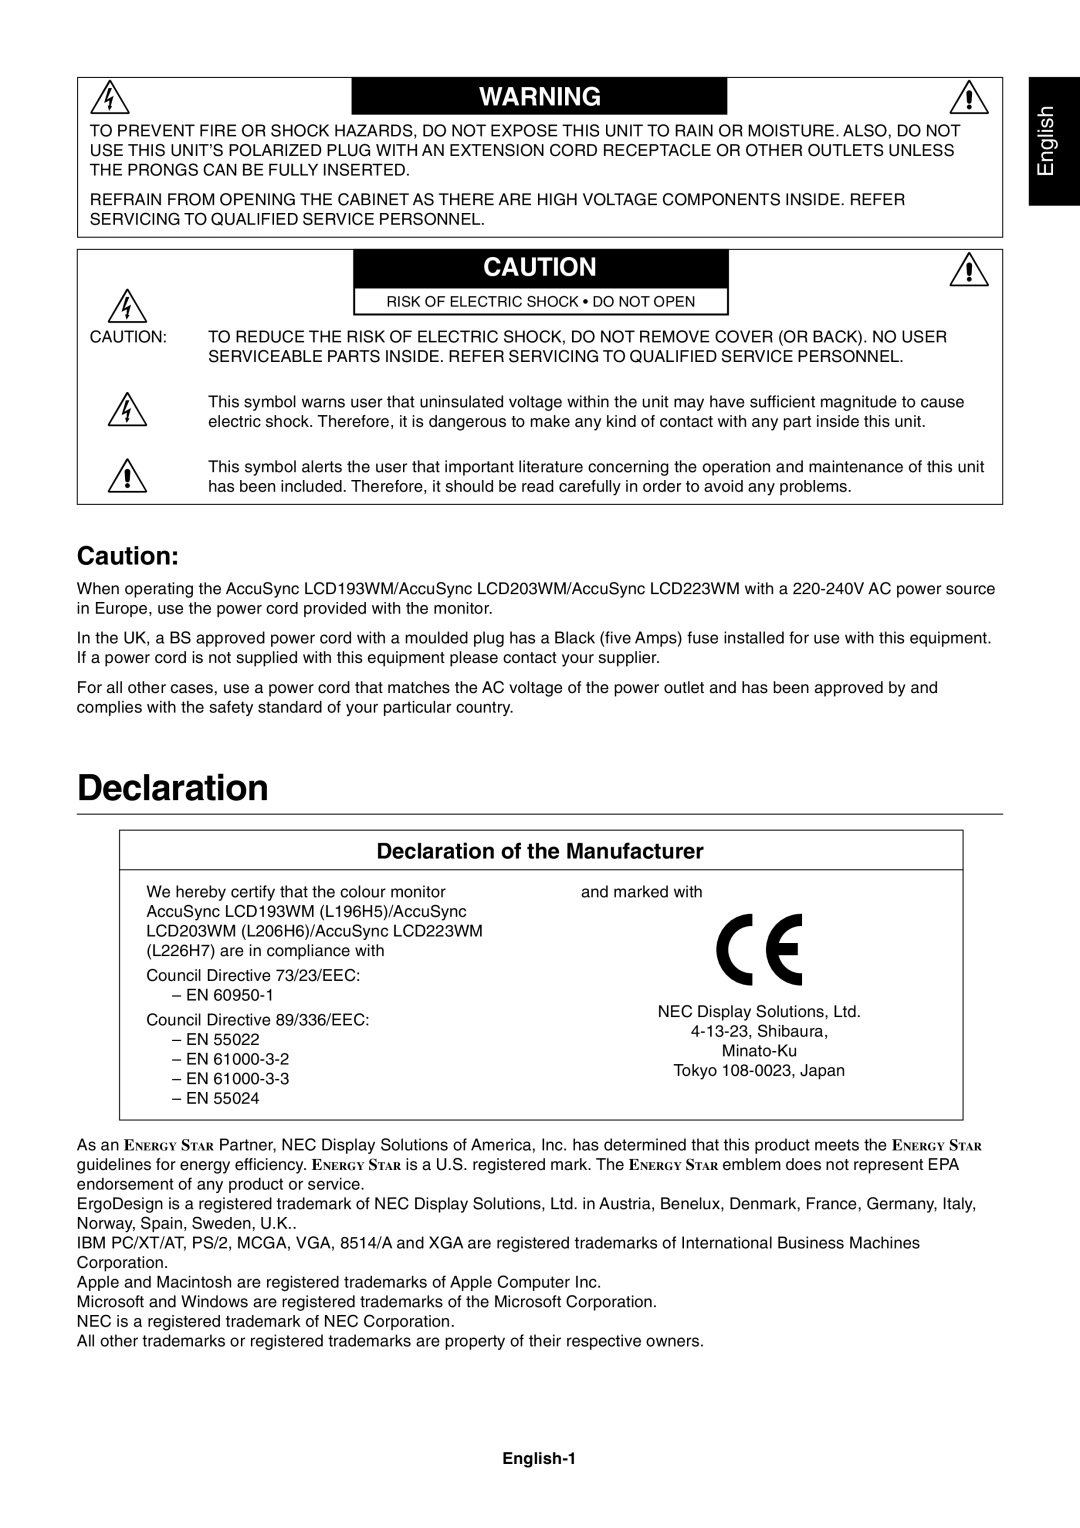 NEC LCD203WM, LCD223WM, LCD193WM user manual English, Declaration of the Manufacturer 